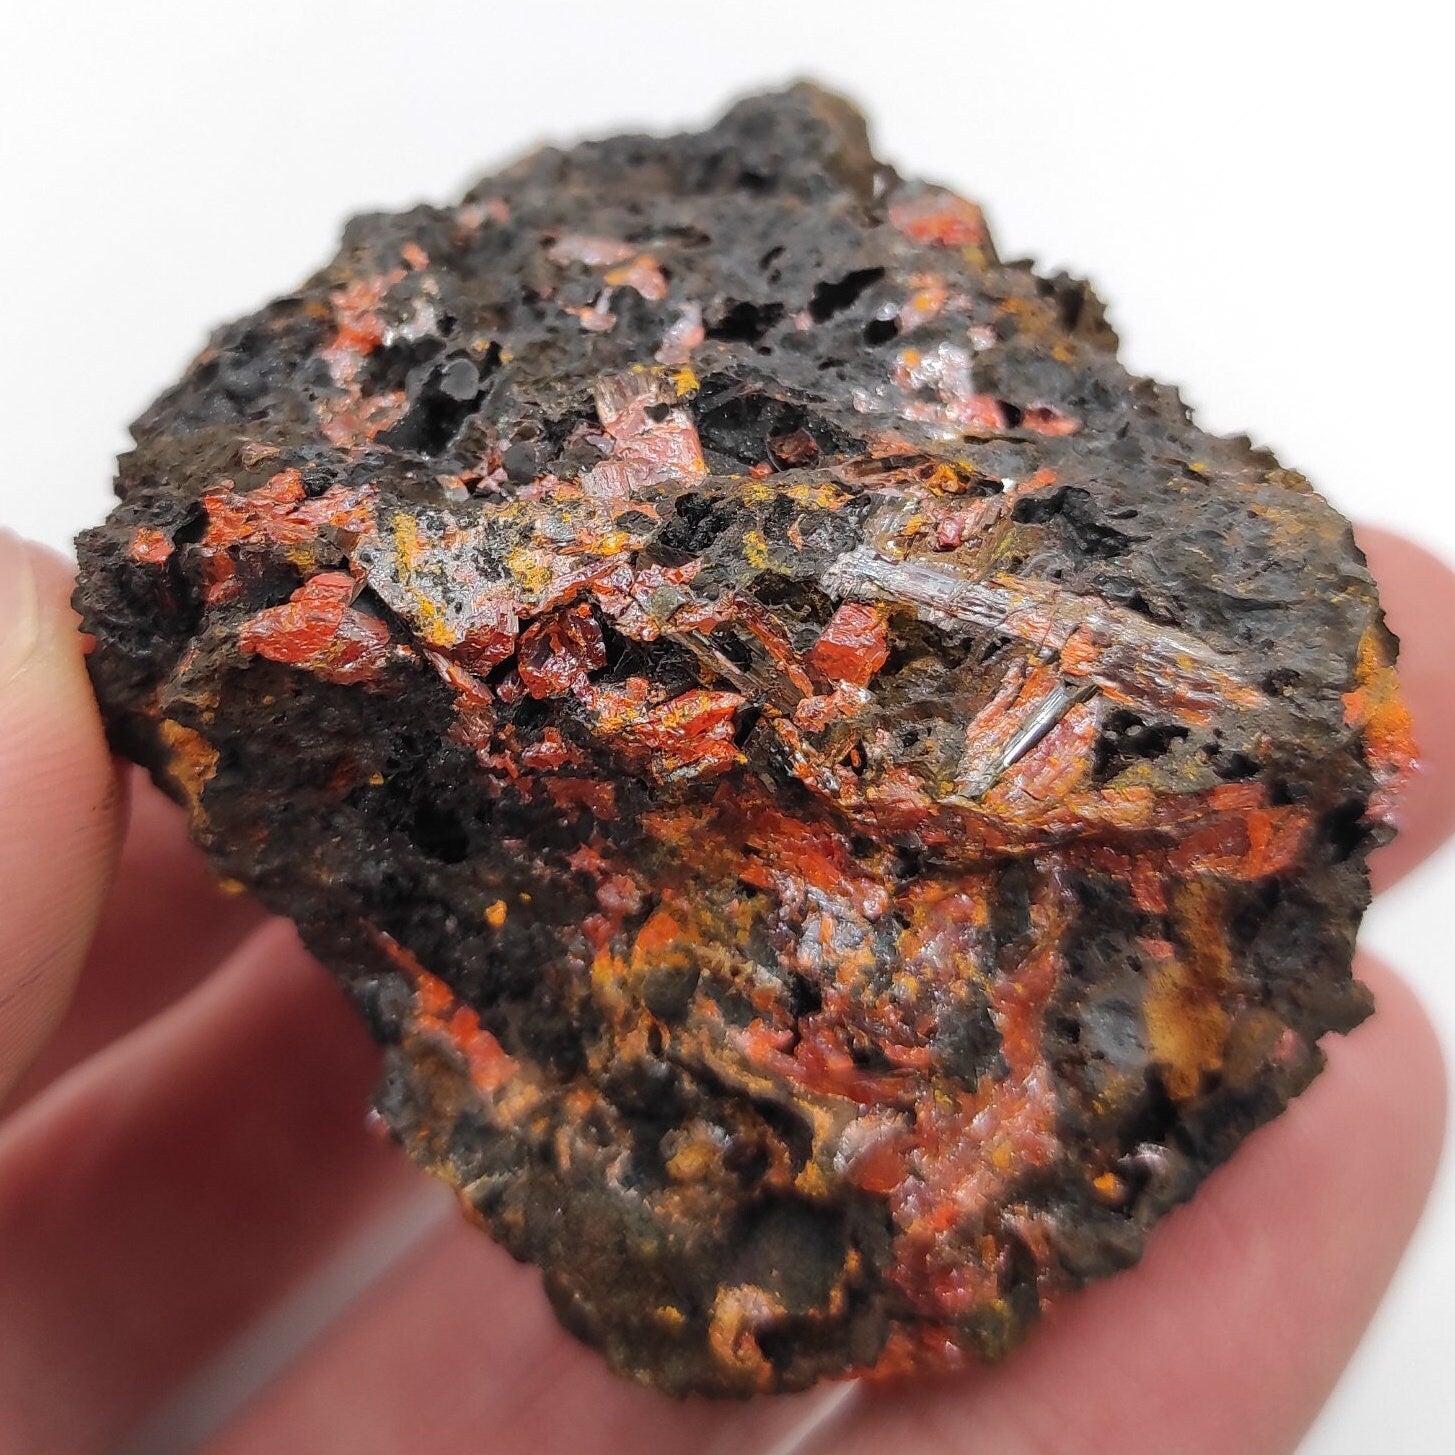 104g Crocoite Specimen from Australia - Orange Crocoite Mineral Specimen - Raw Crocoite Crystal - Rare Minerals - Tasmania, Australia